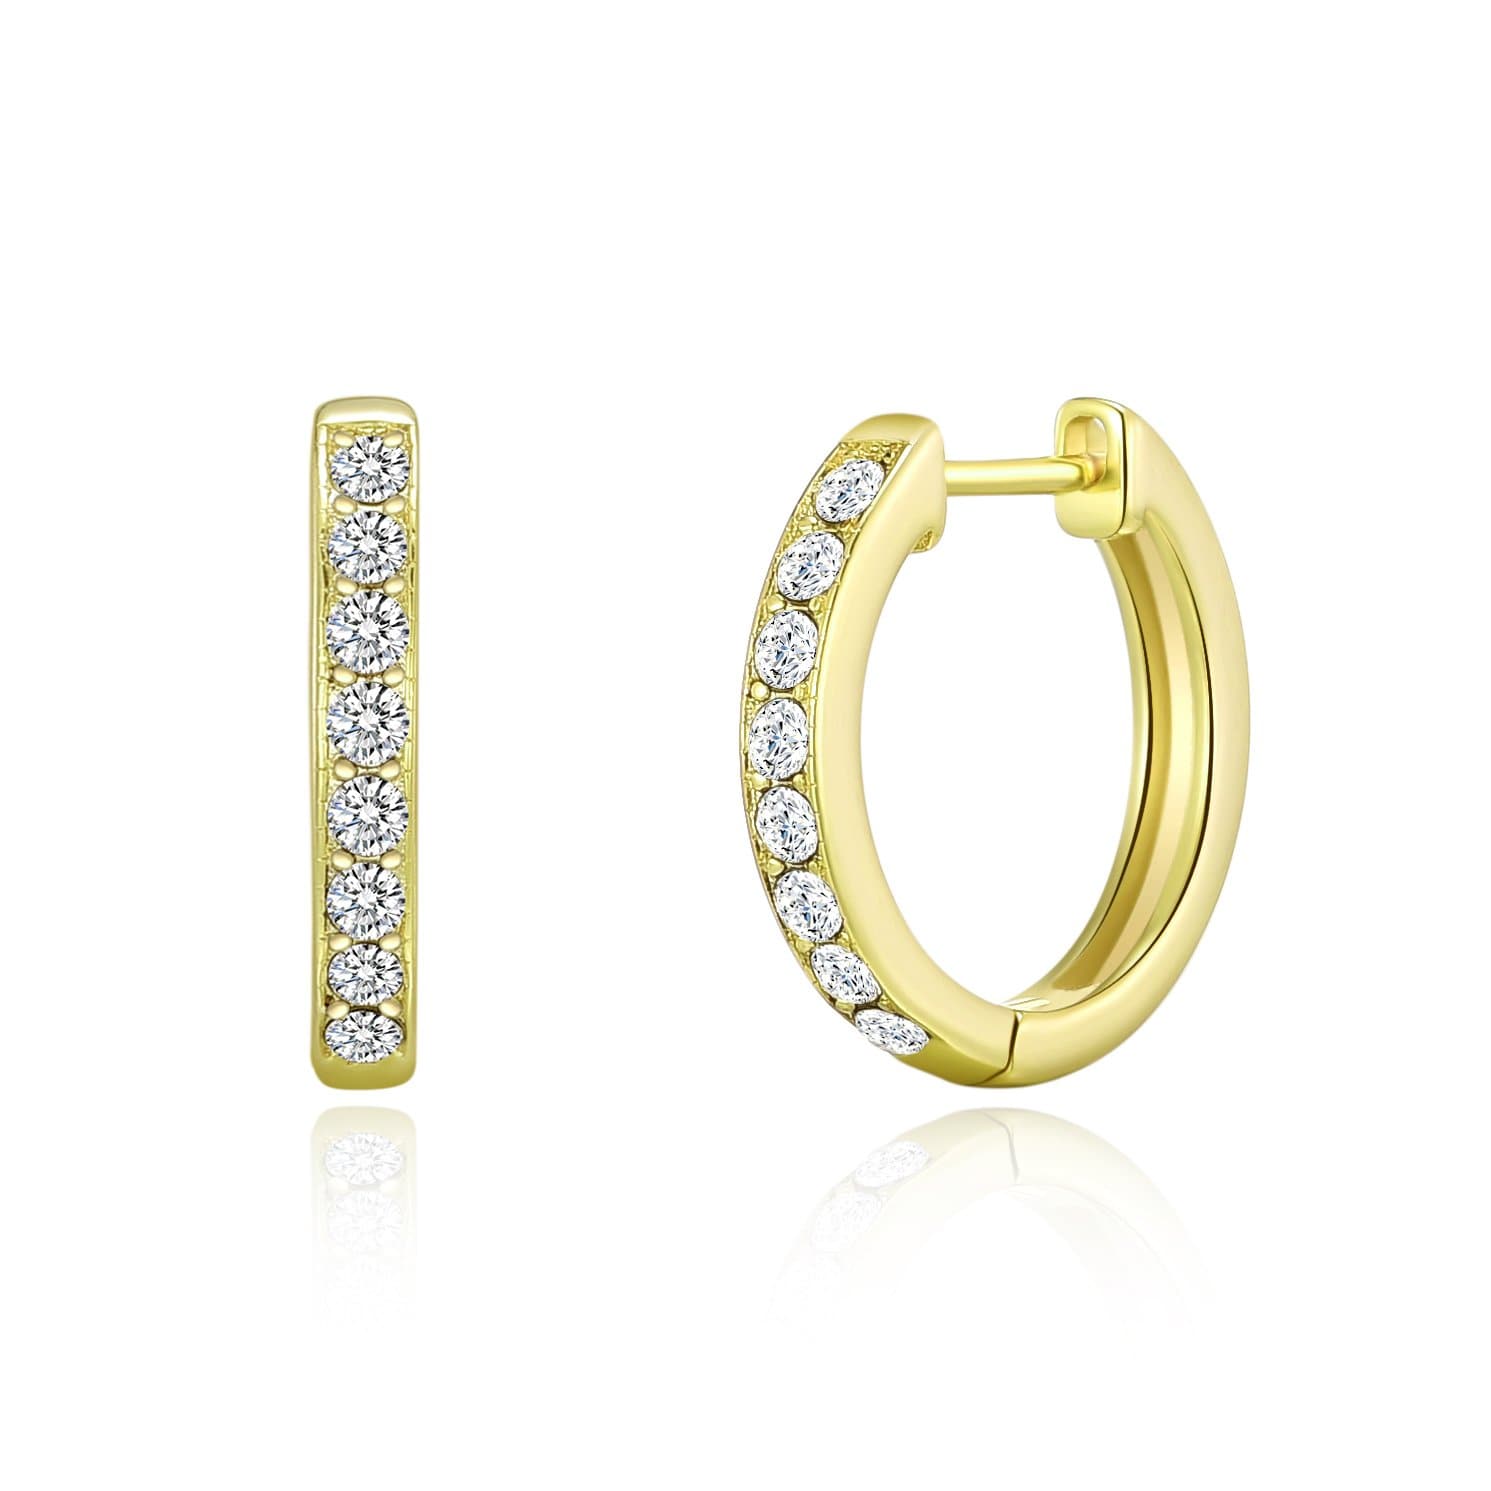 Gold Plated Hoop Earrings Created with Zircondia® Crystals by Philip Jones Jewellery